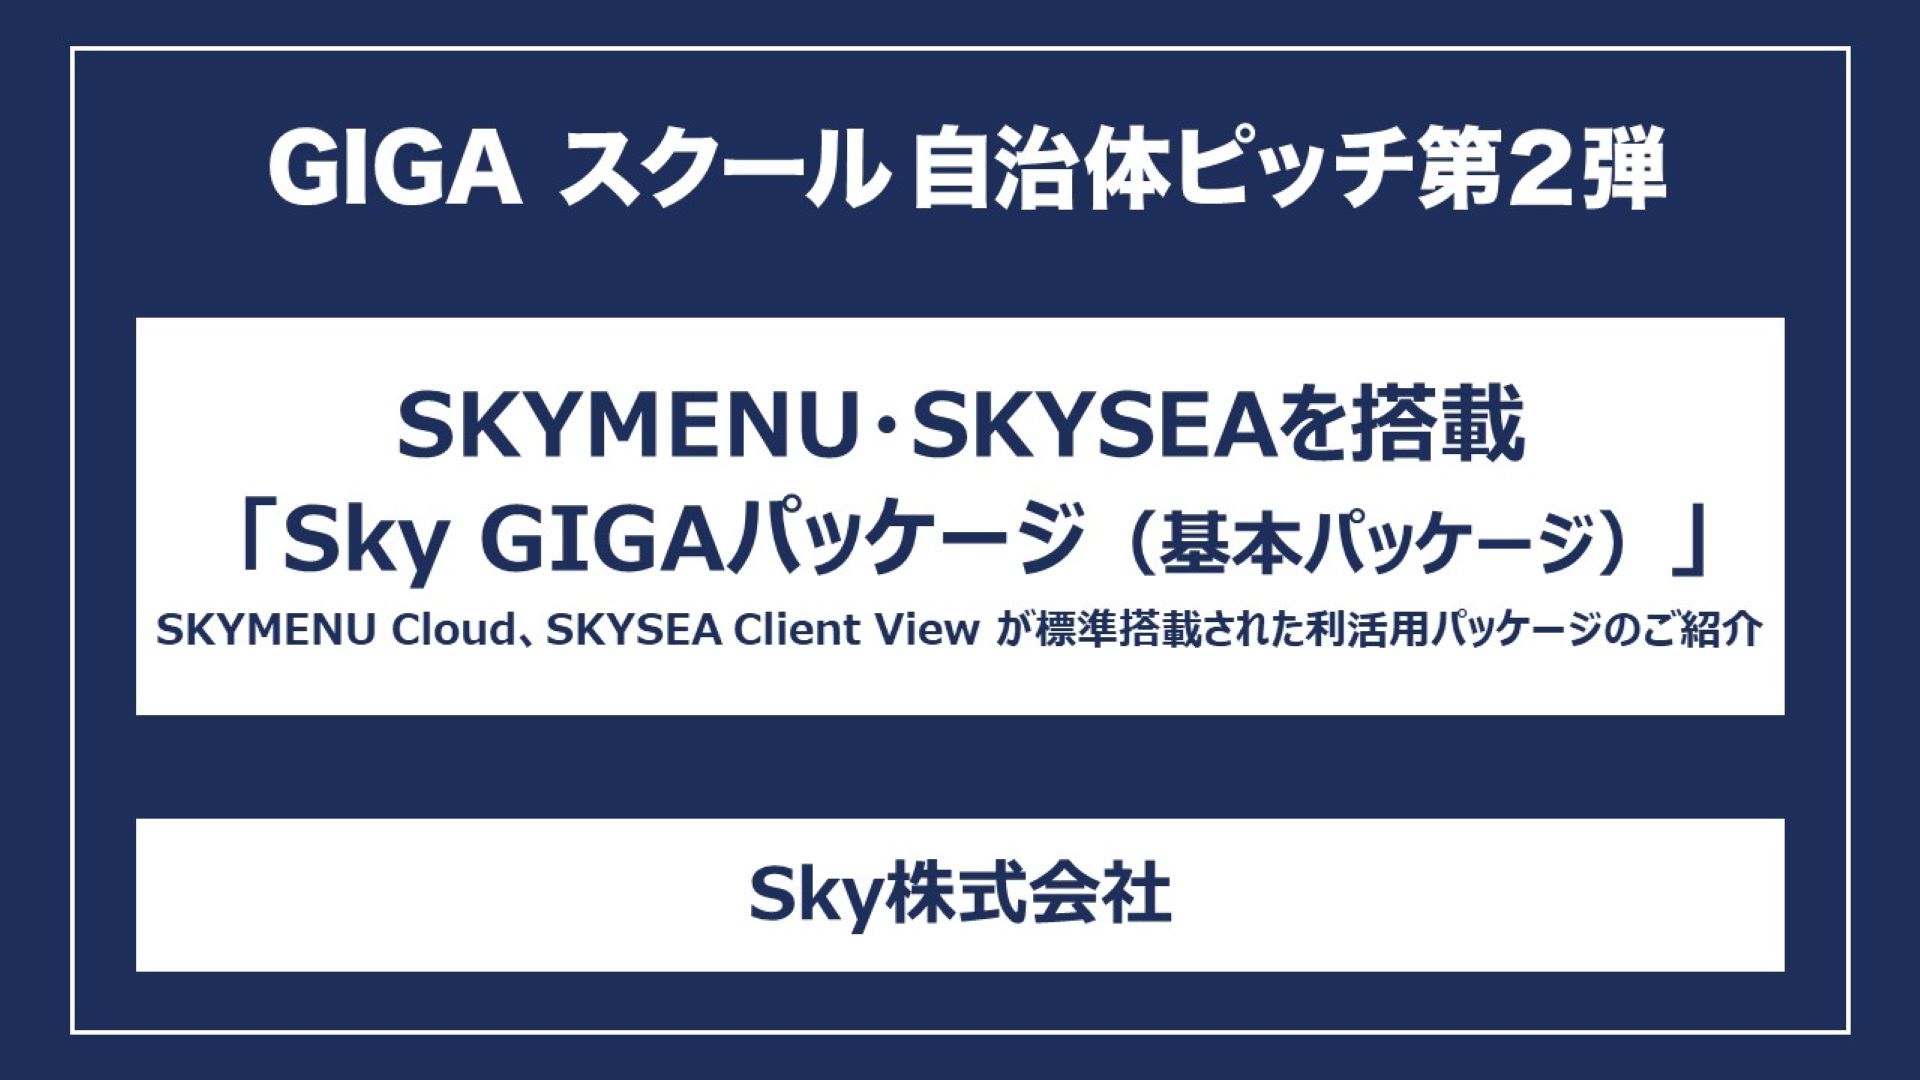 SKYMENU・SKYSEAを搭載「Sky GIGAパッケージ（基本パッケージ）」SKYMENU Cloud、SKYSEA Client View が標準搭載された利活用パッケージのご紹介